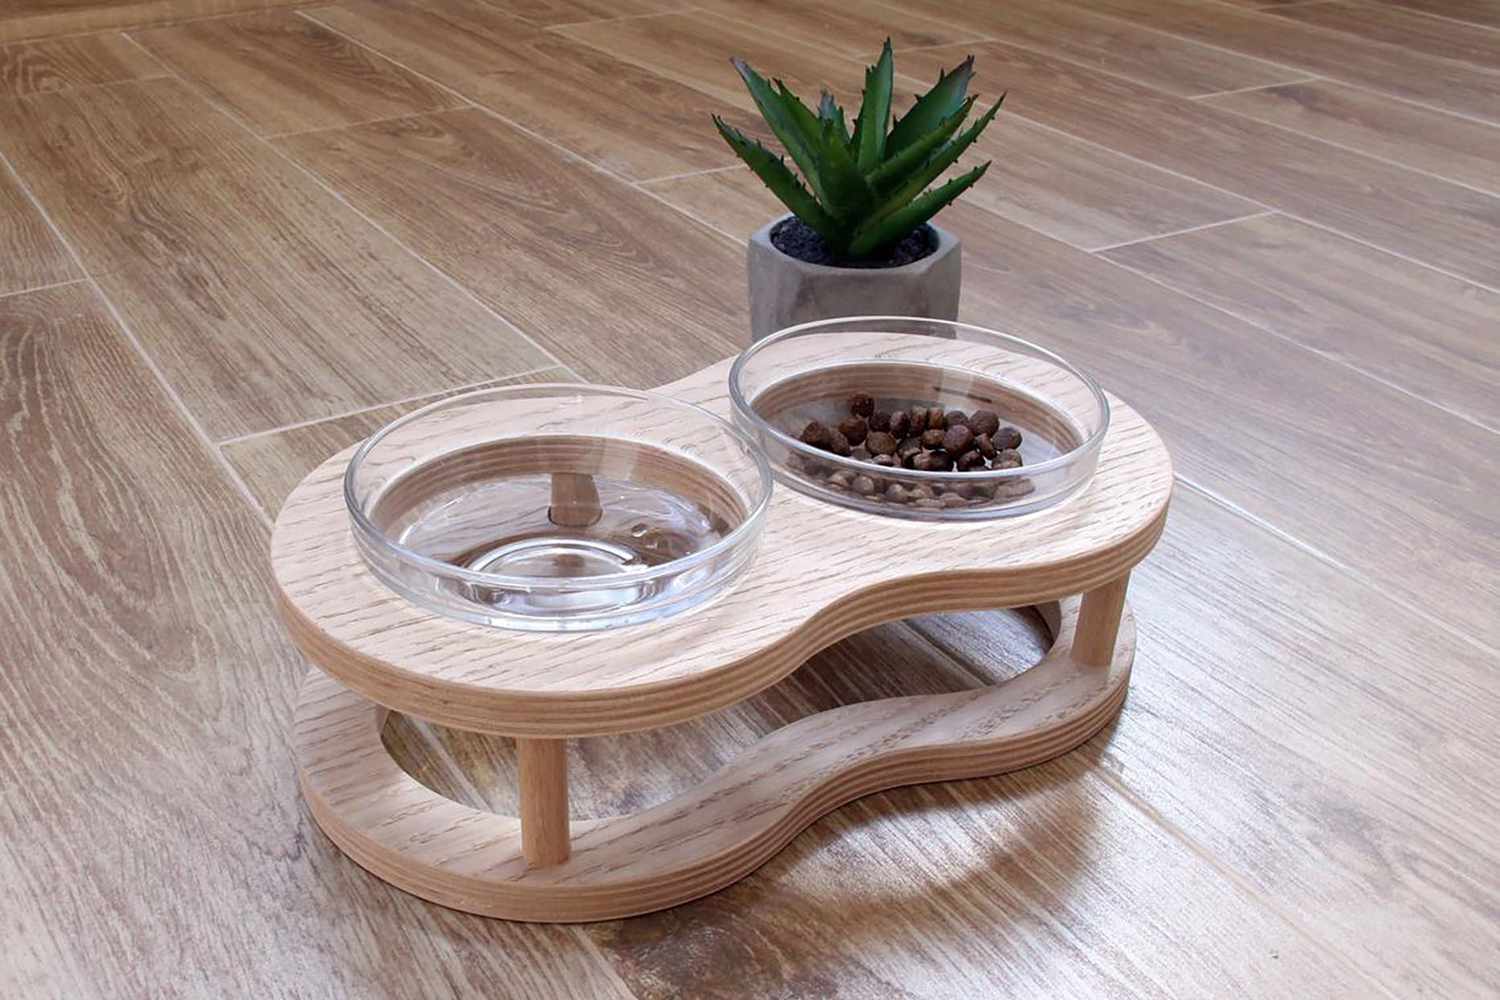 Wood dog bowl stand